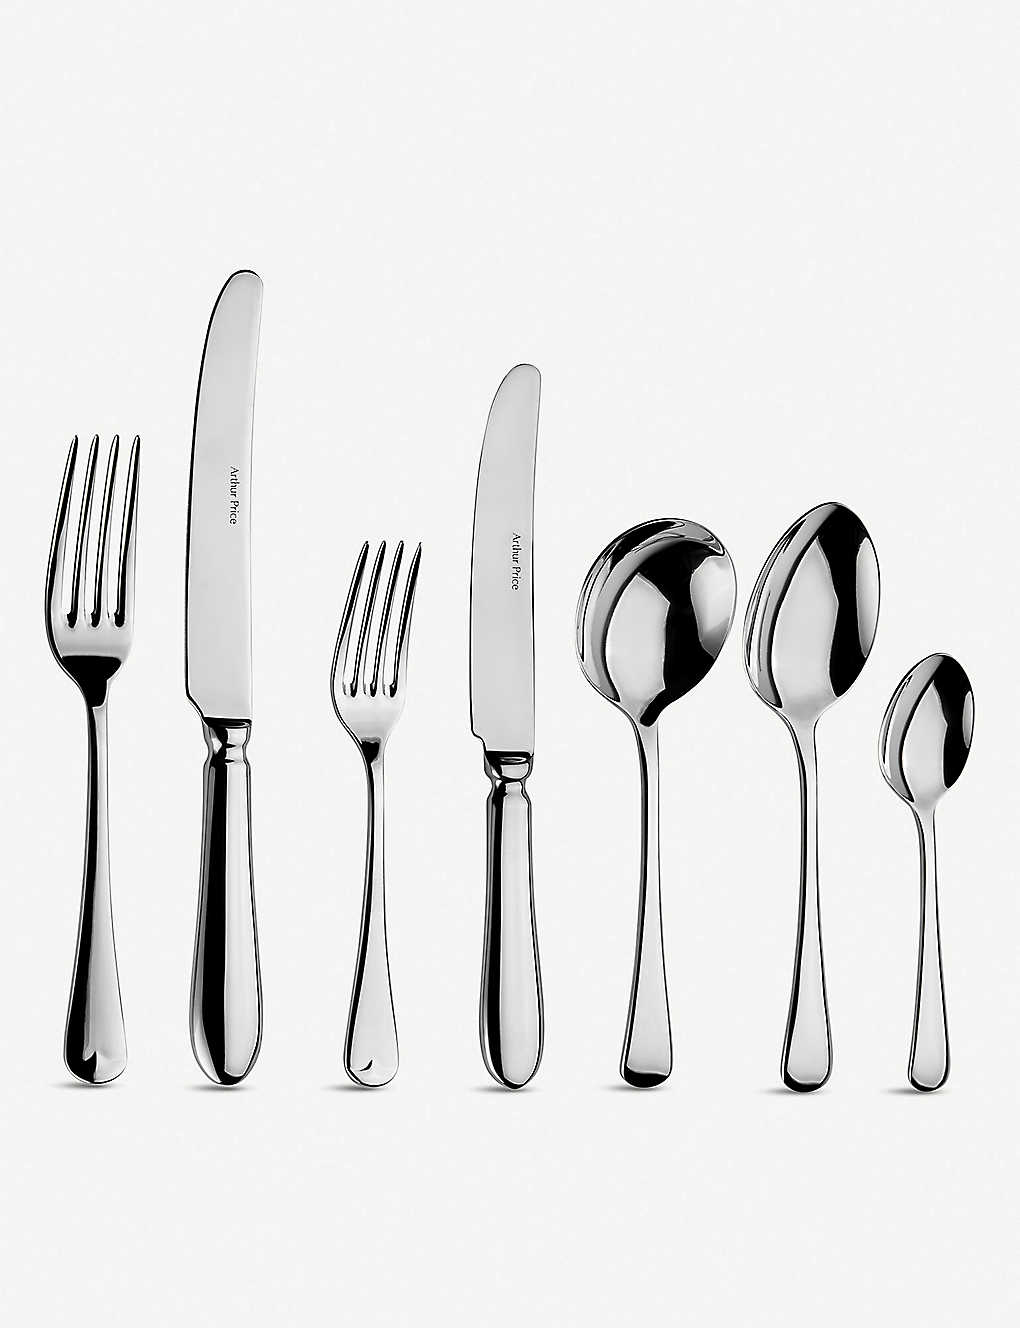 ARTHUR PRICE ジョージアン ステンレススチール カトラリー 44本セット Georgian stainless steel cutlery set of 44 #CLEAR